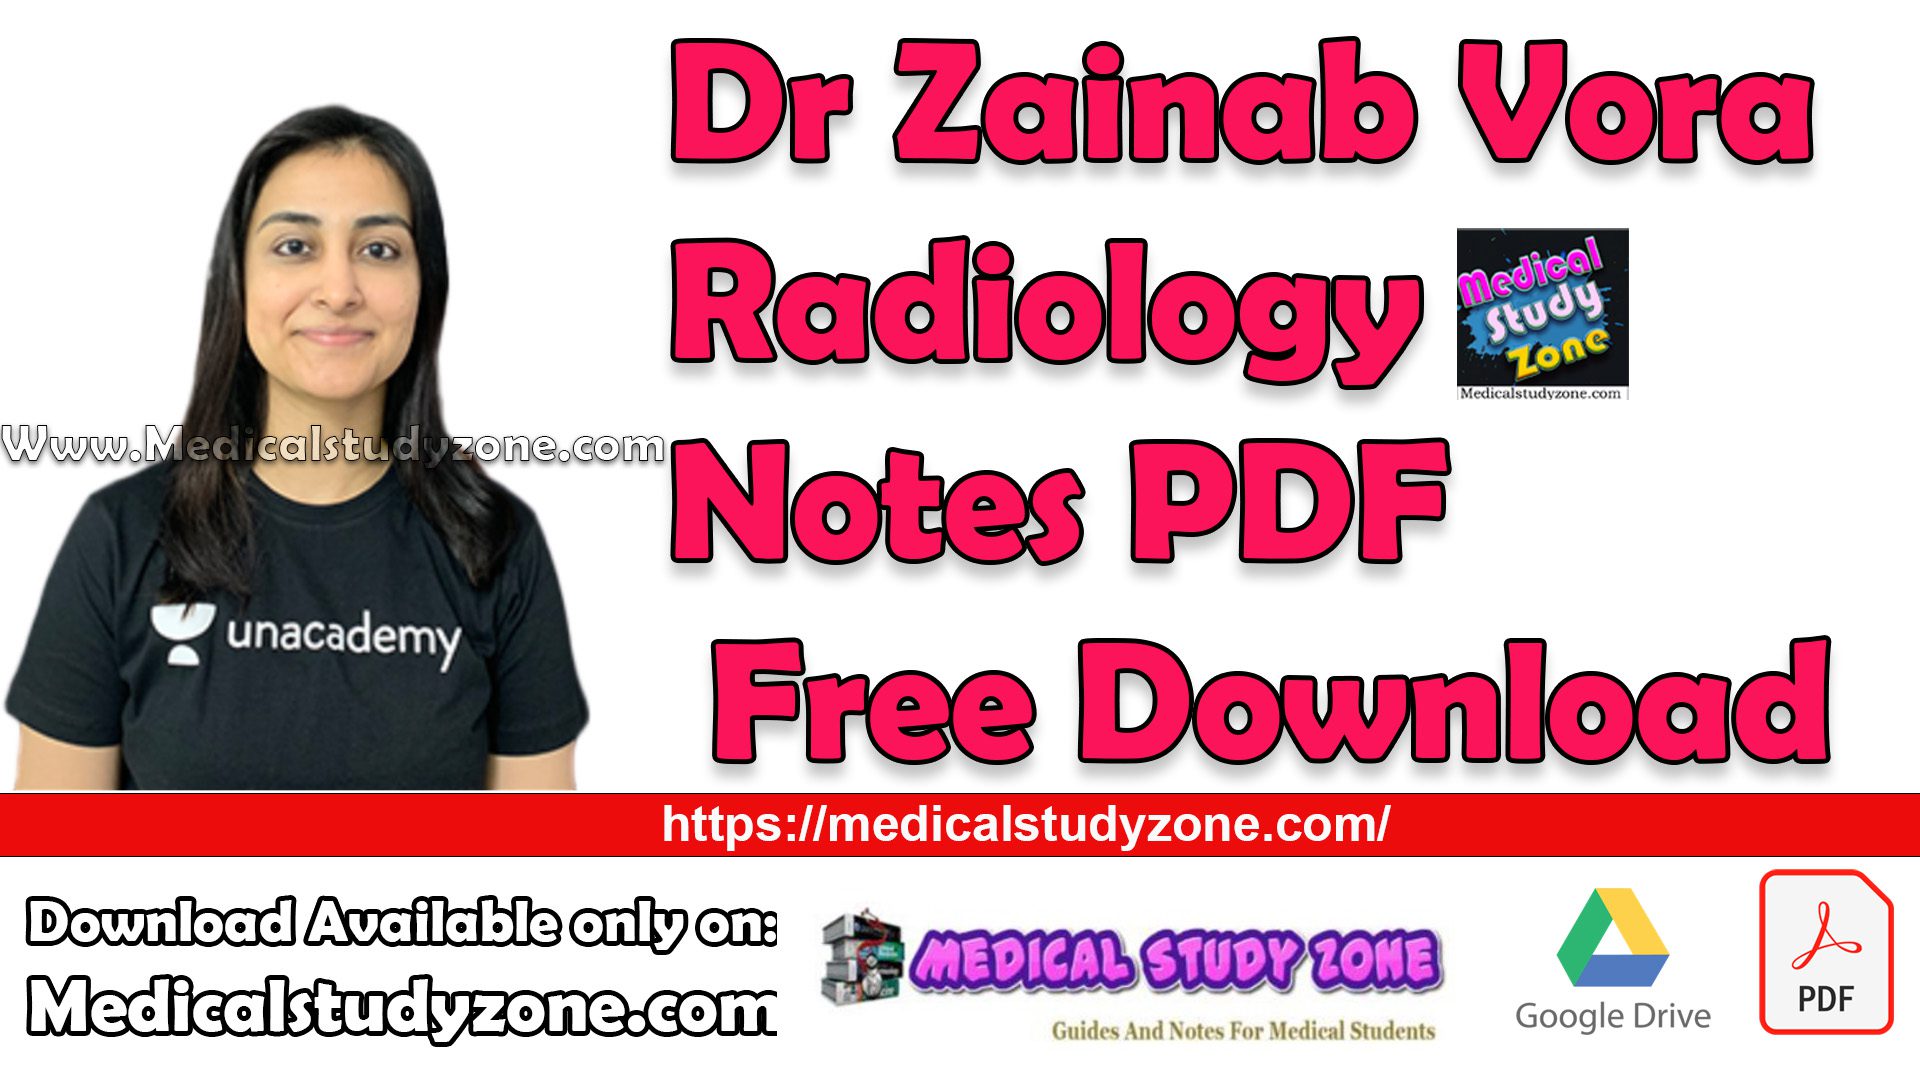 Dr Zainab Vora Radiology Notes PDF Free Download